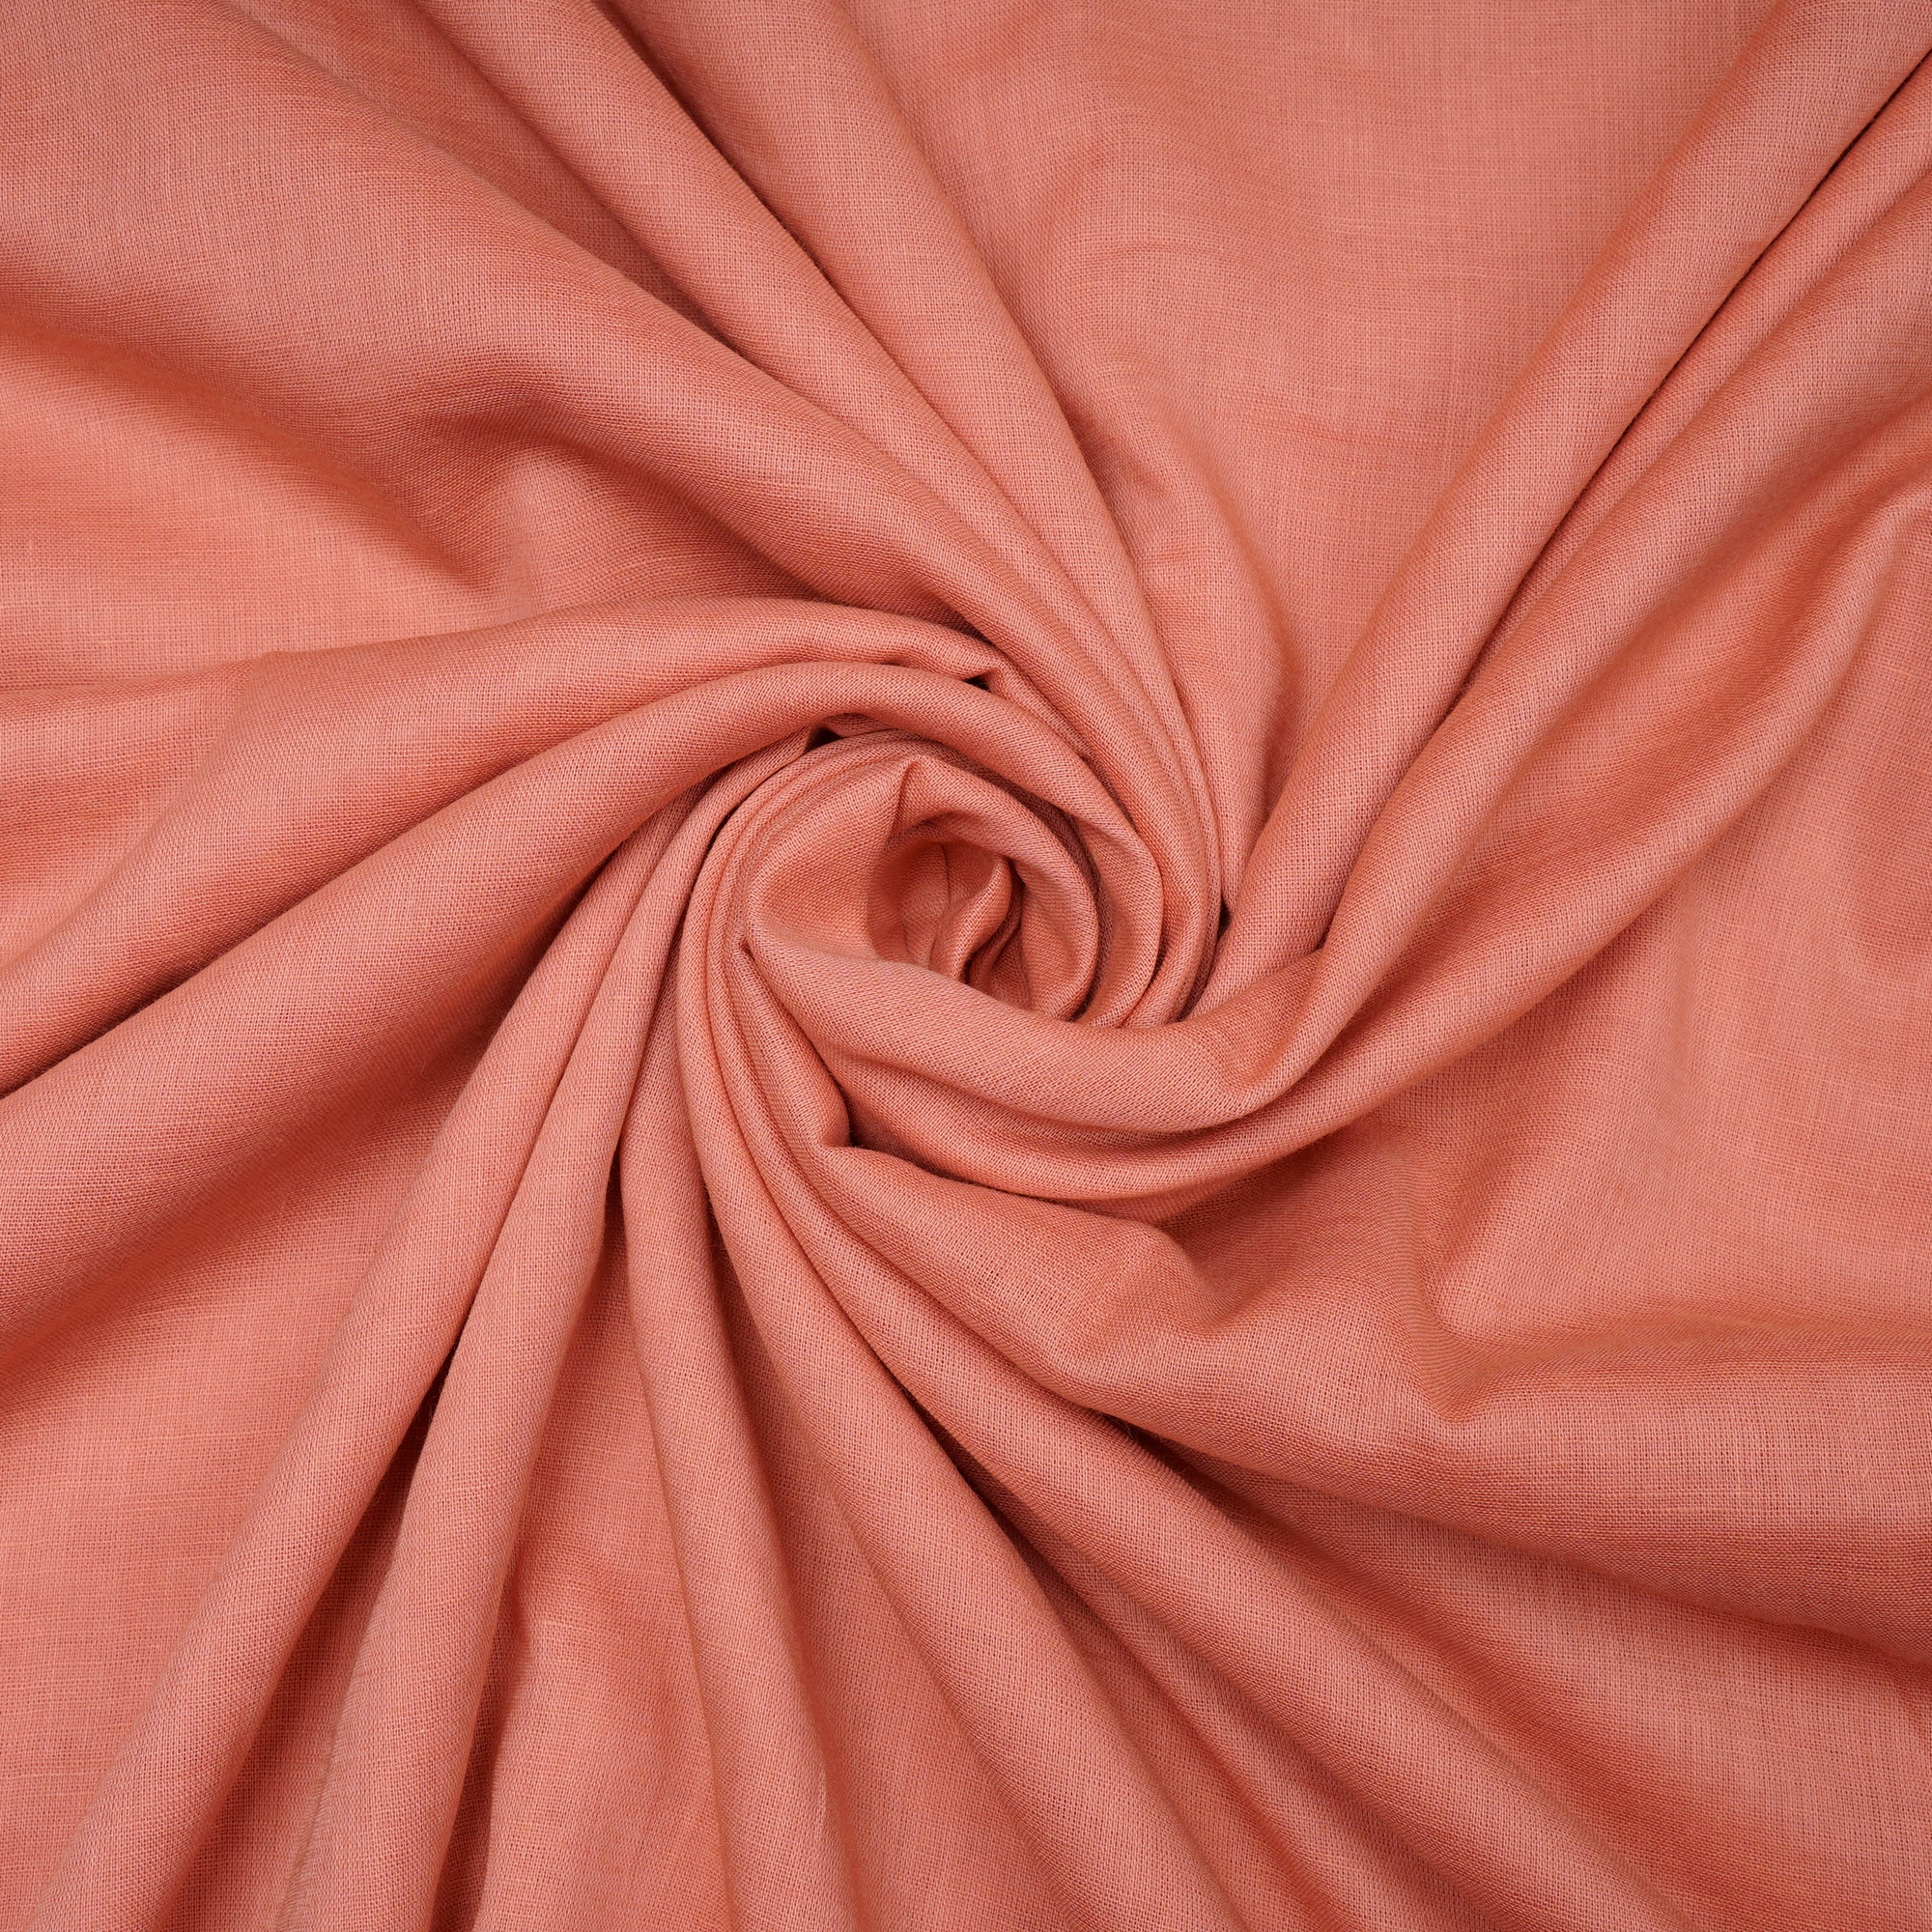 Blush Peach Piece Dyed Cotton Voile Fabric